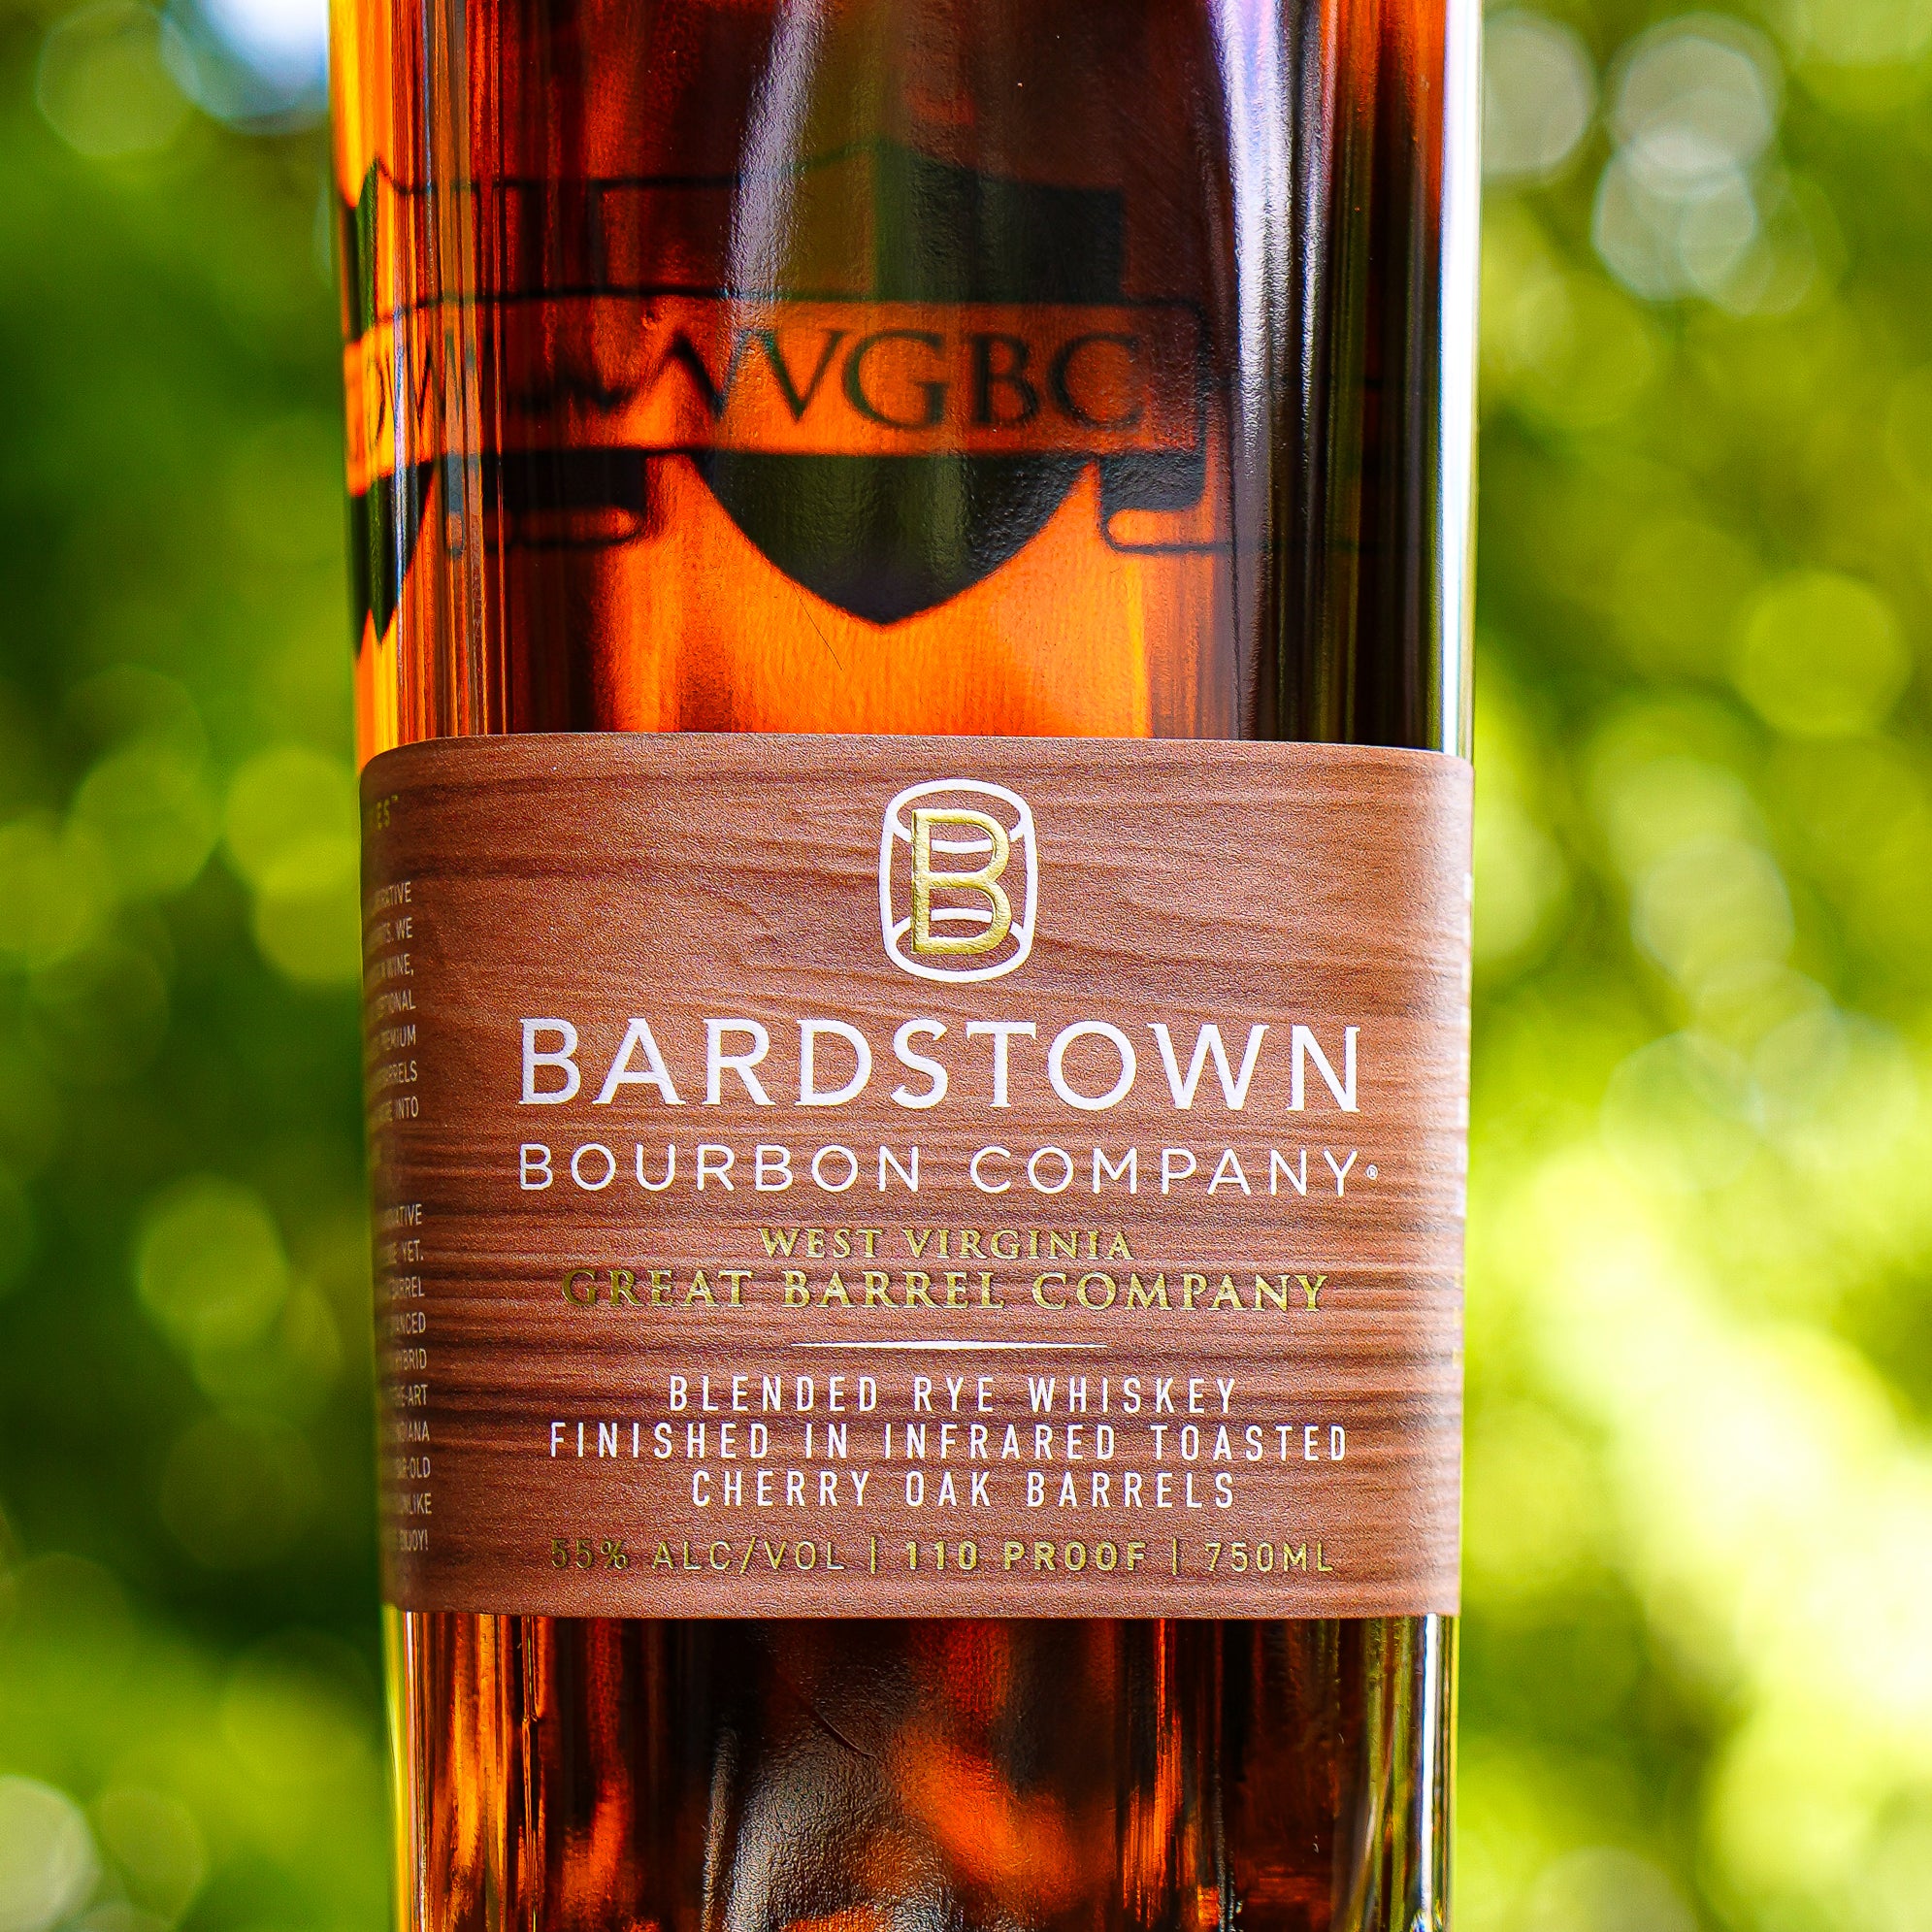 Bardstown Bourbon Company West Virginia Great Barrel Co. Blended Rye